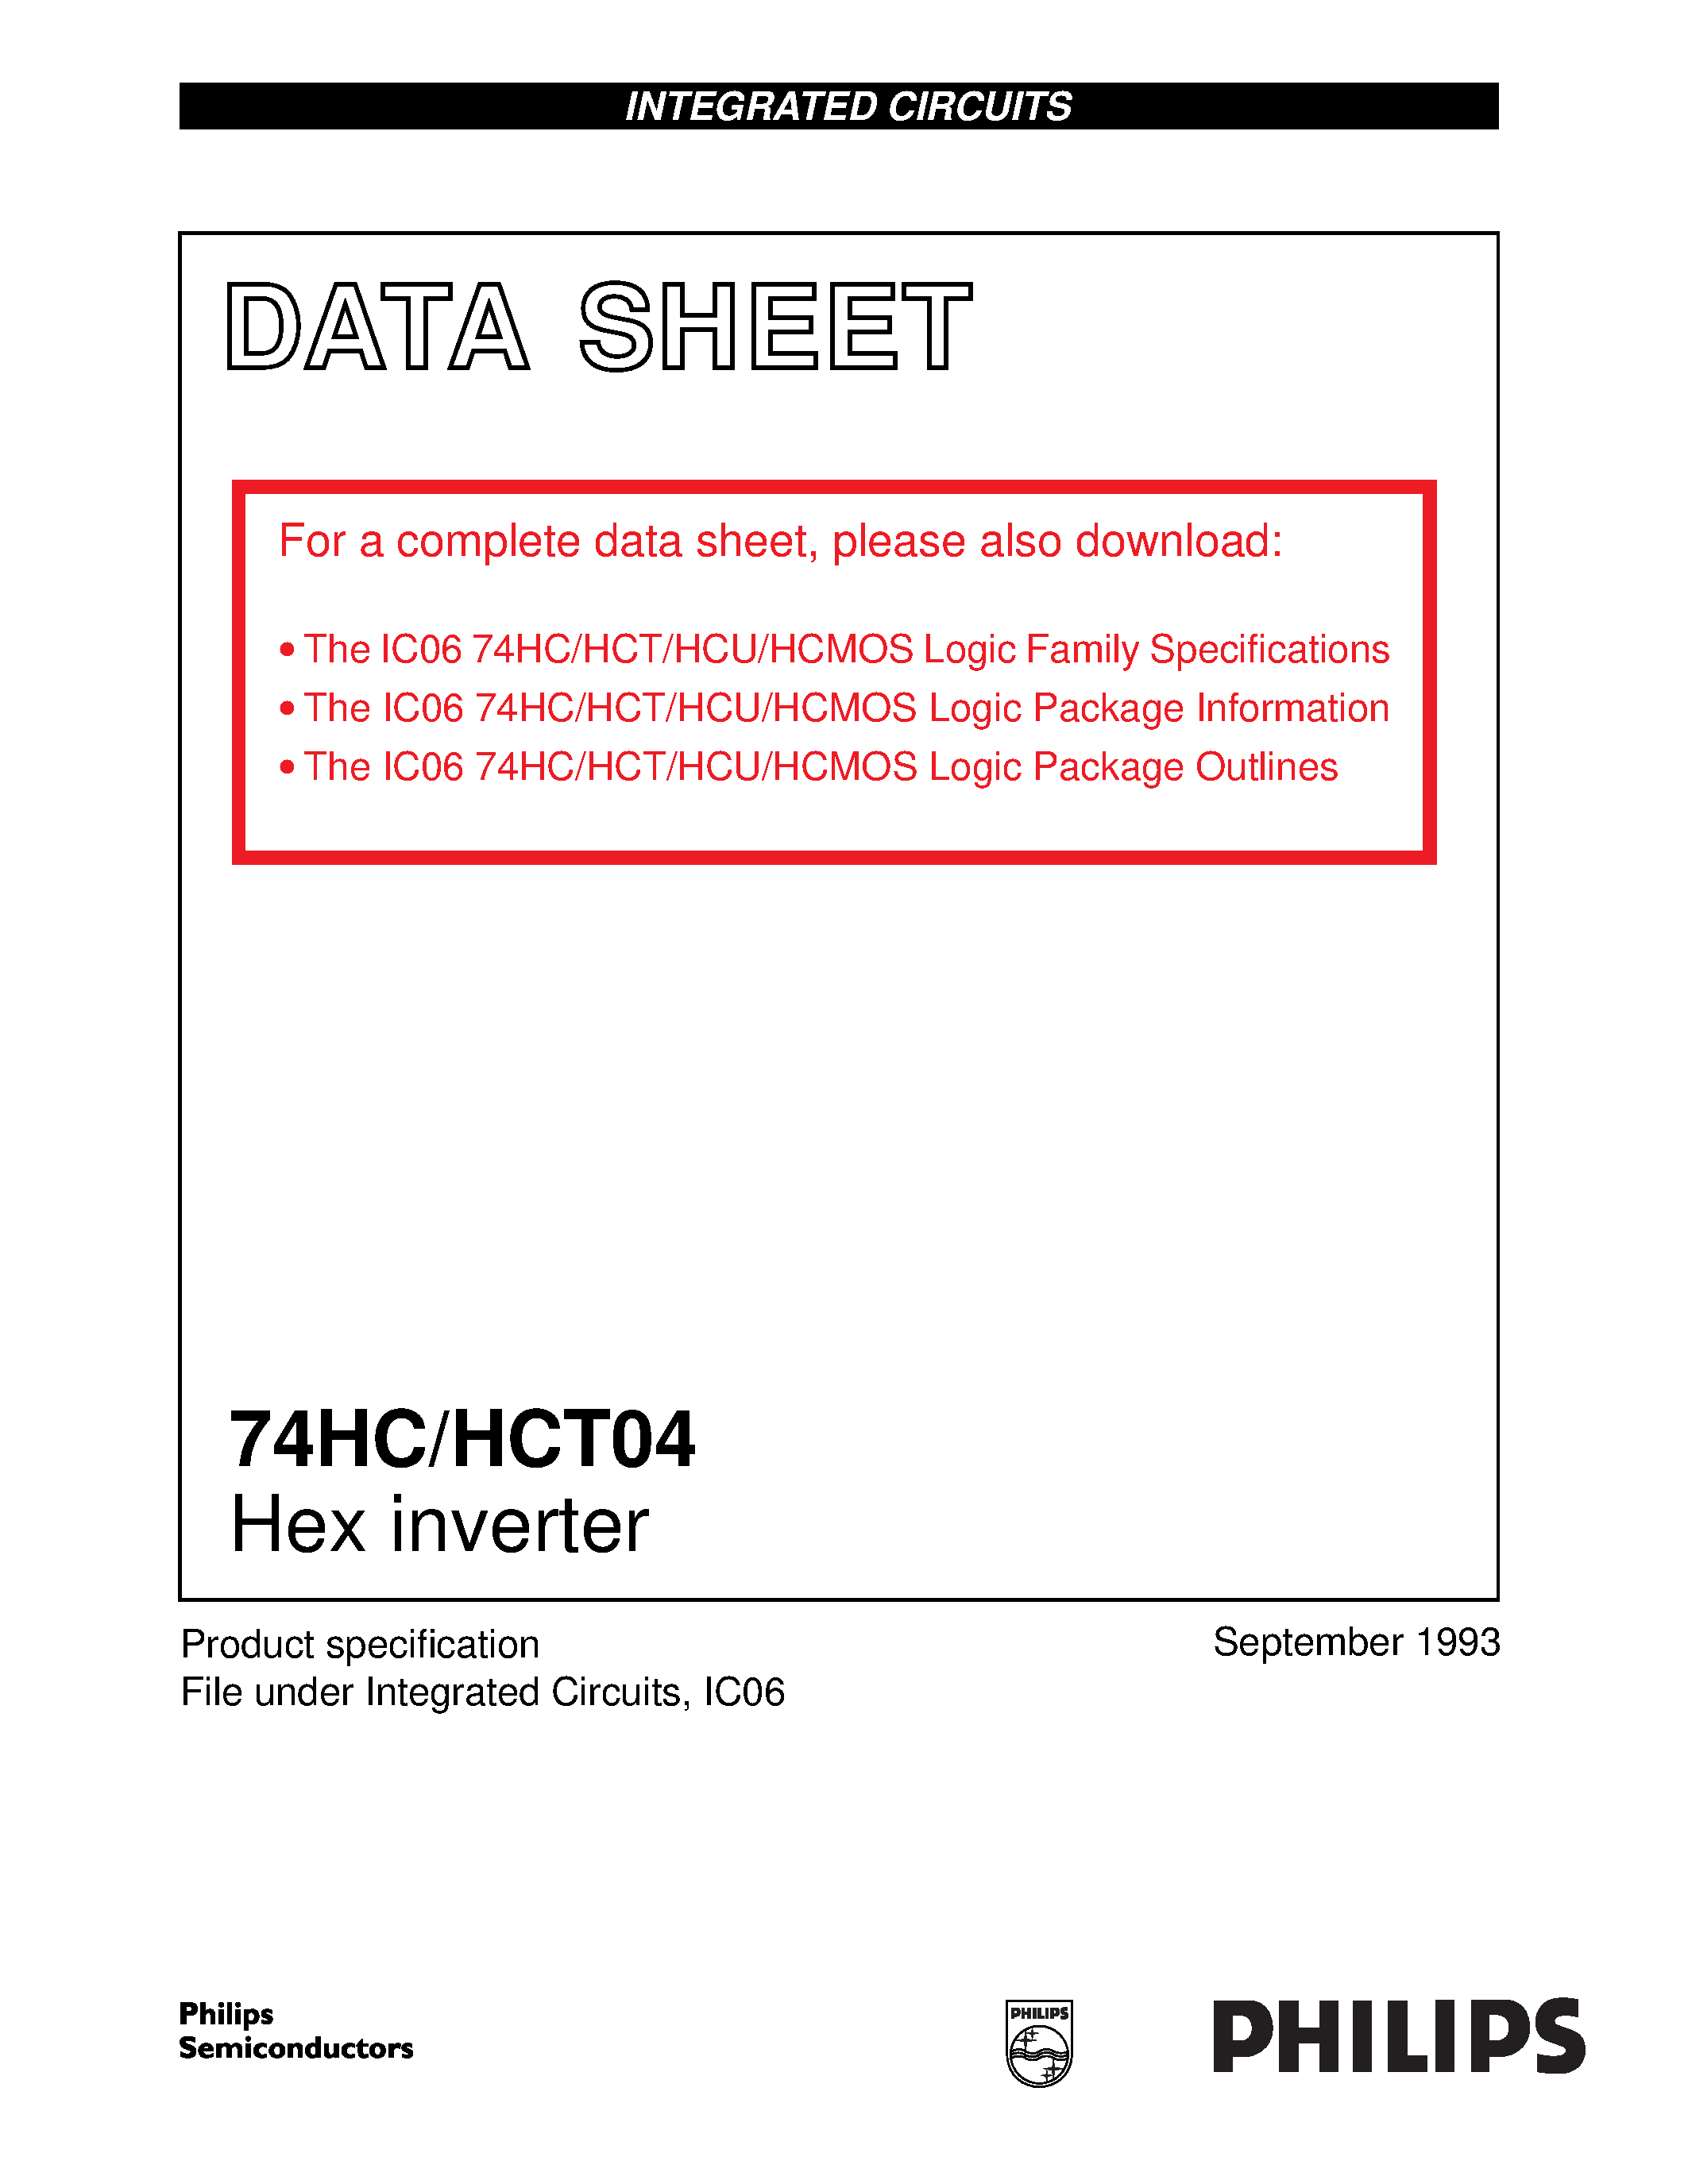 Даташит 74HCT04 - Hex inverter страница 1